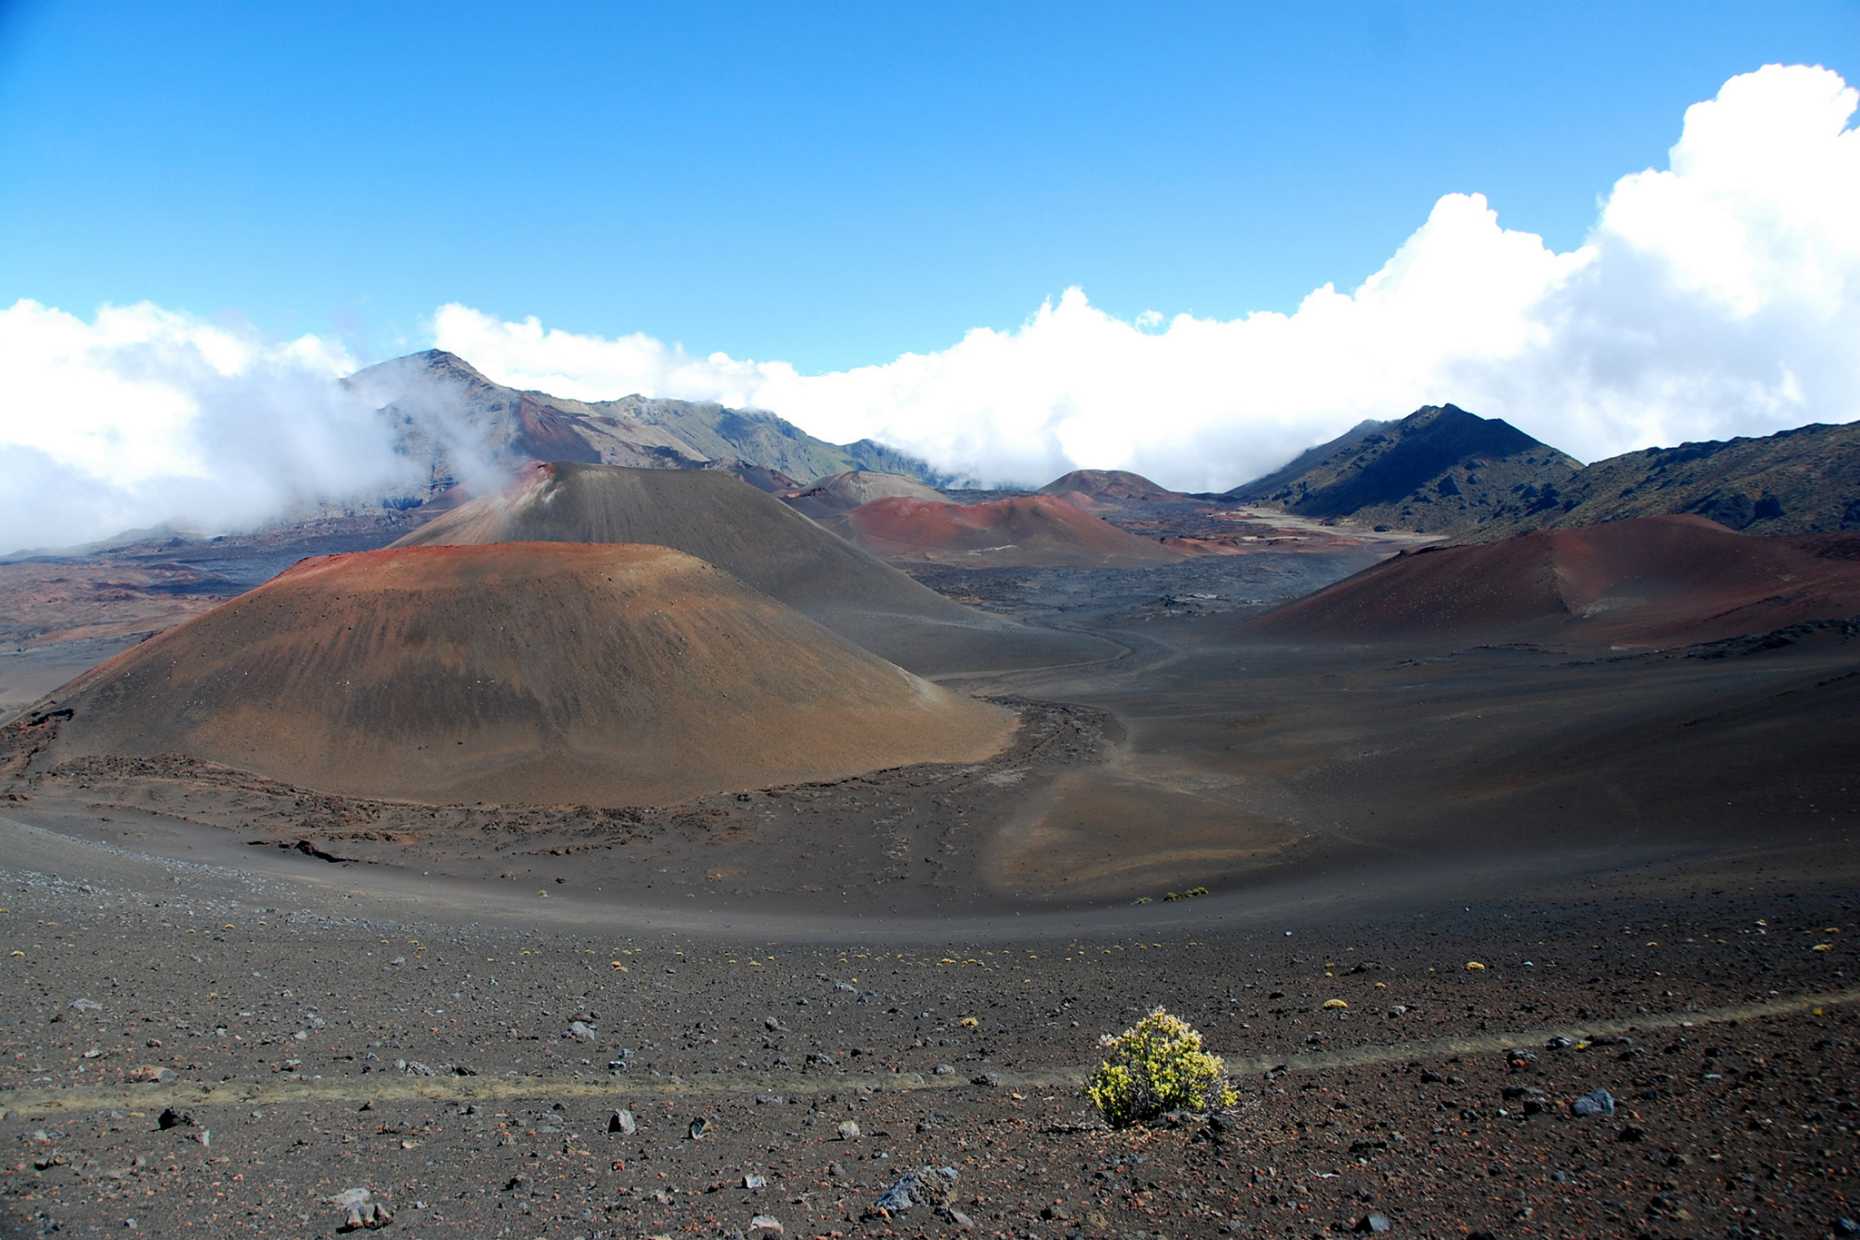 Enlarged view: Haleakala